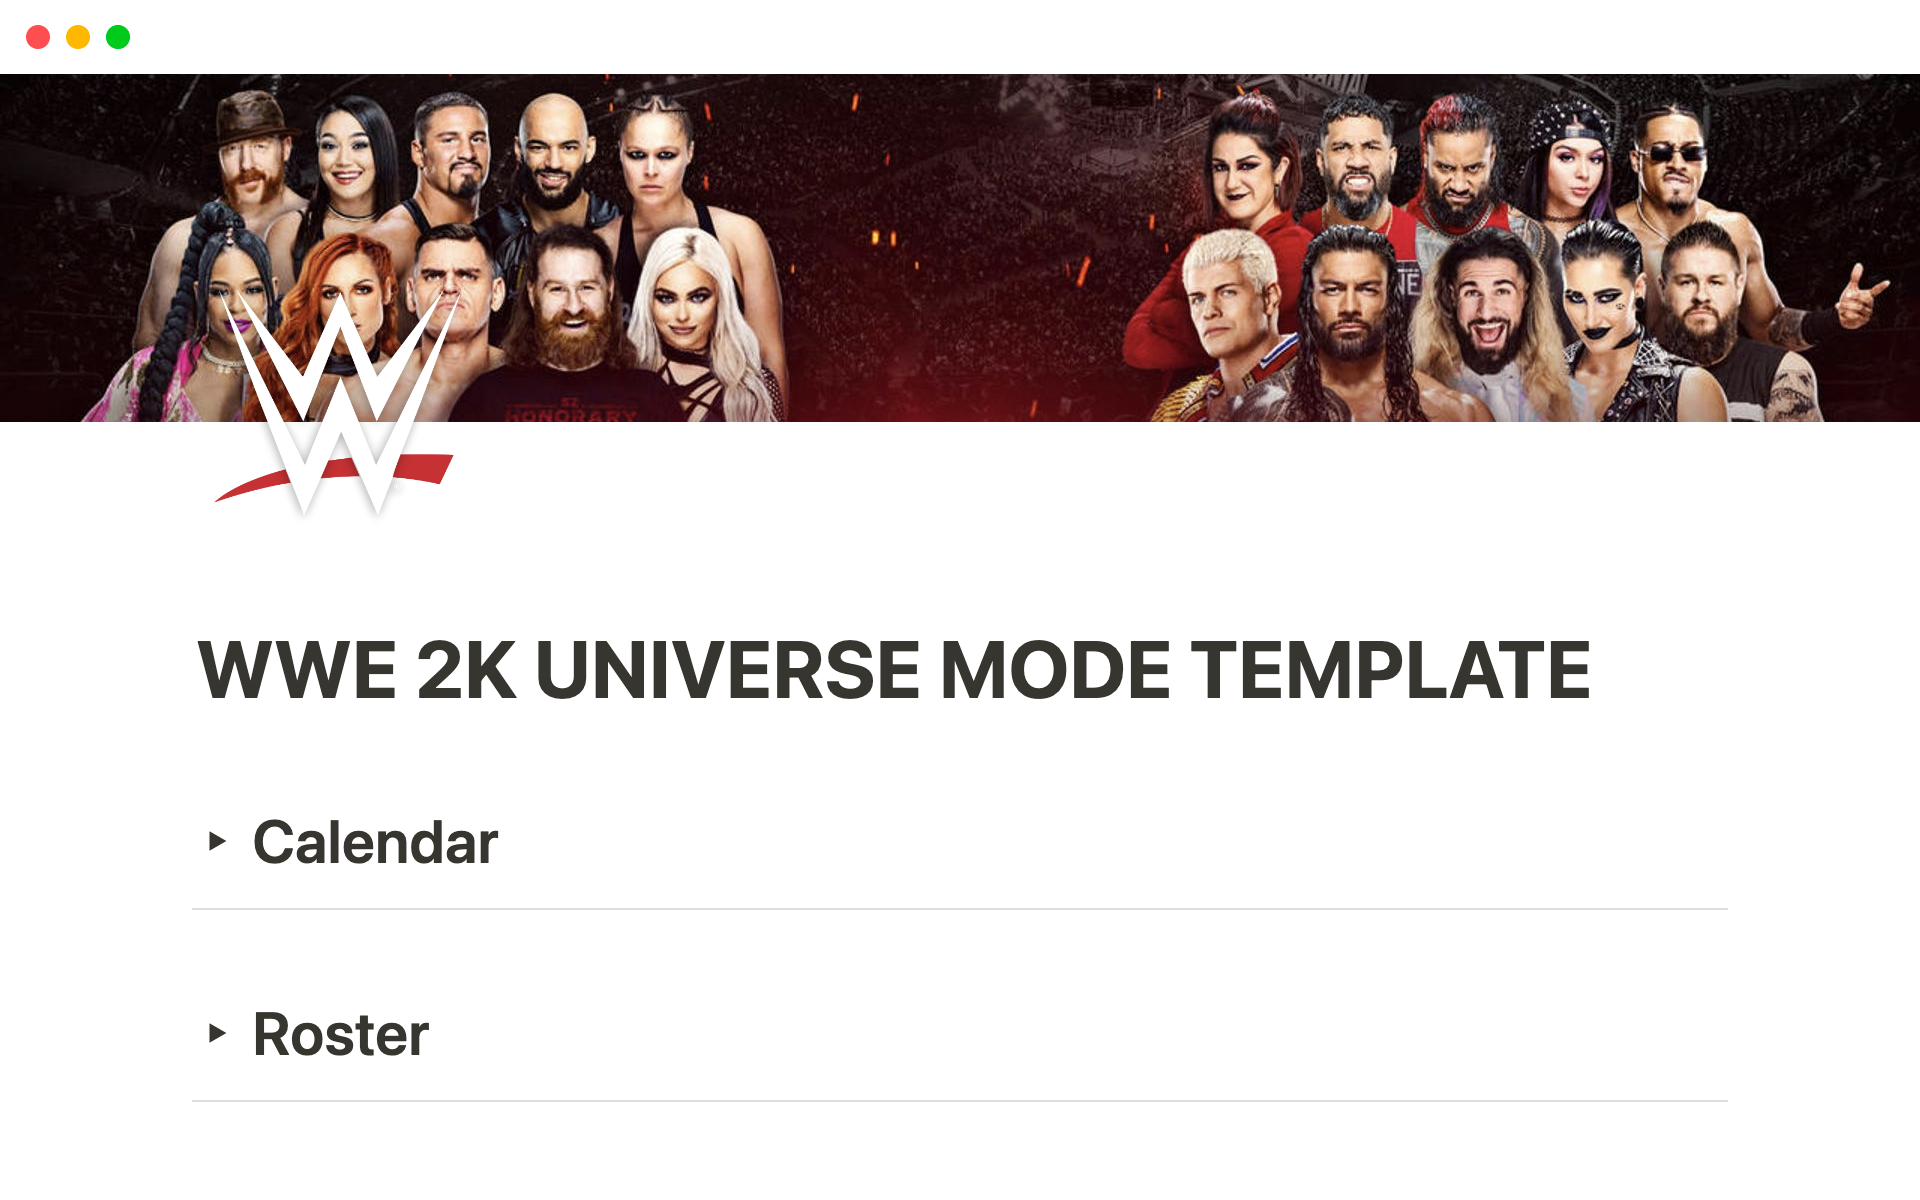 Aperçu du modèle de WWE 2K Universe Mode